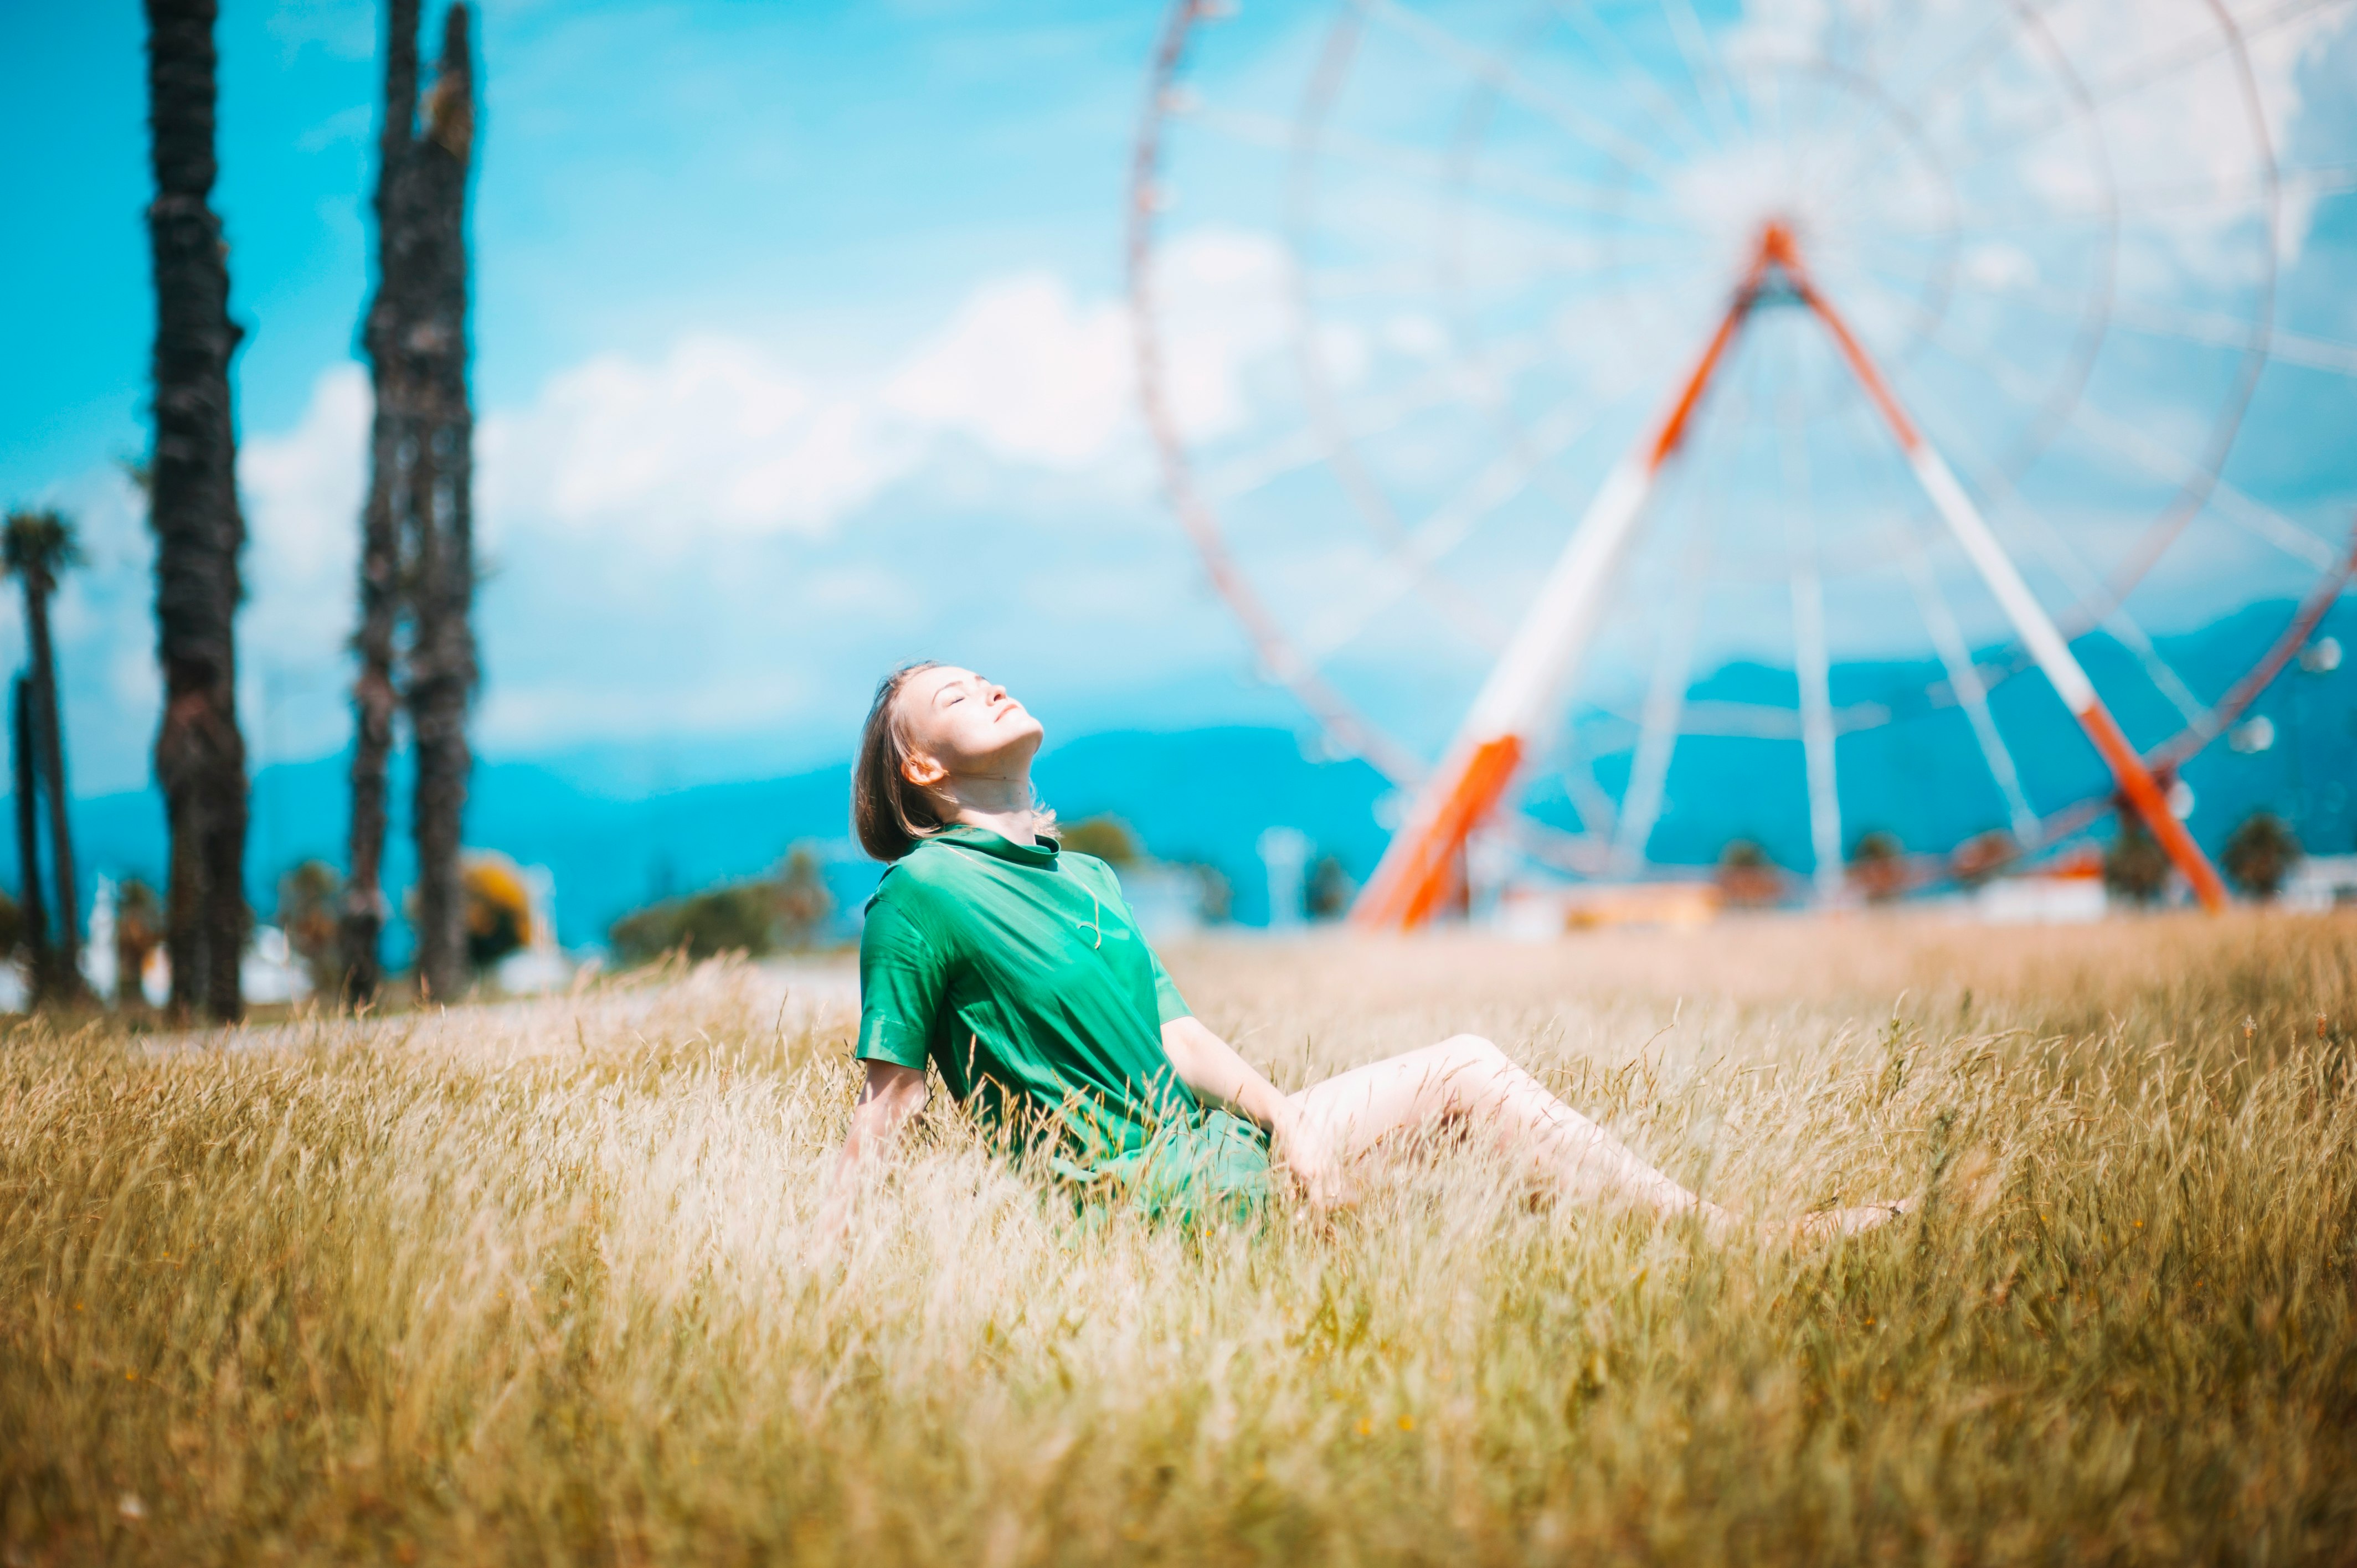 woman sitting on green grass